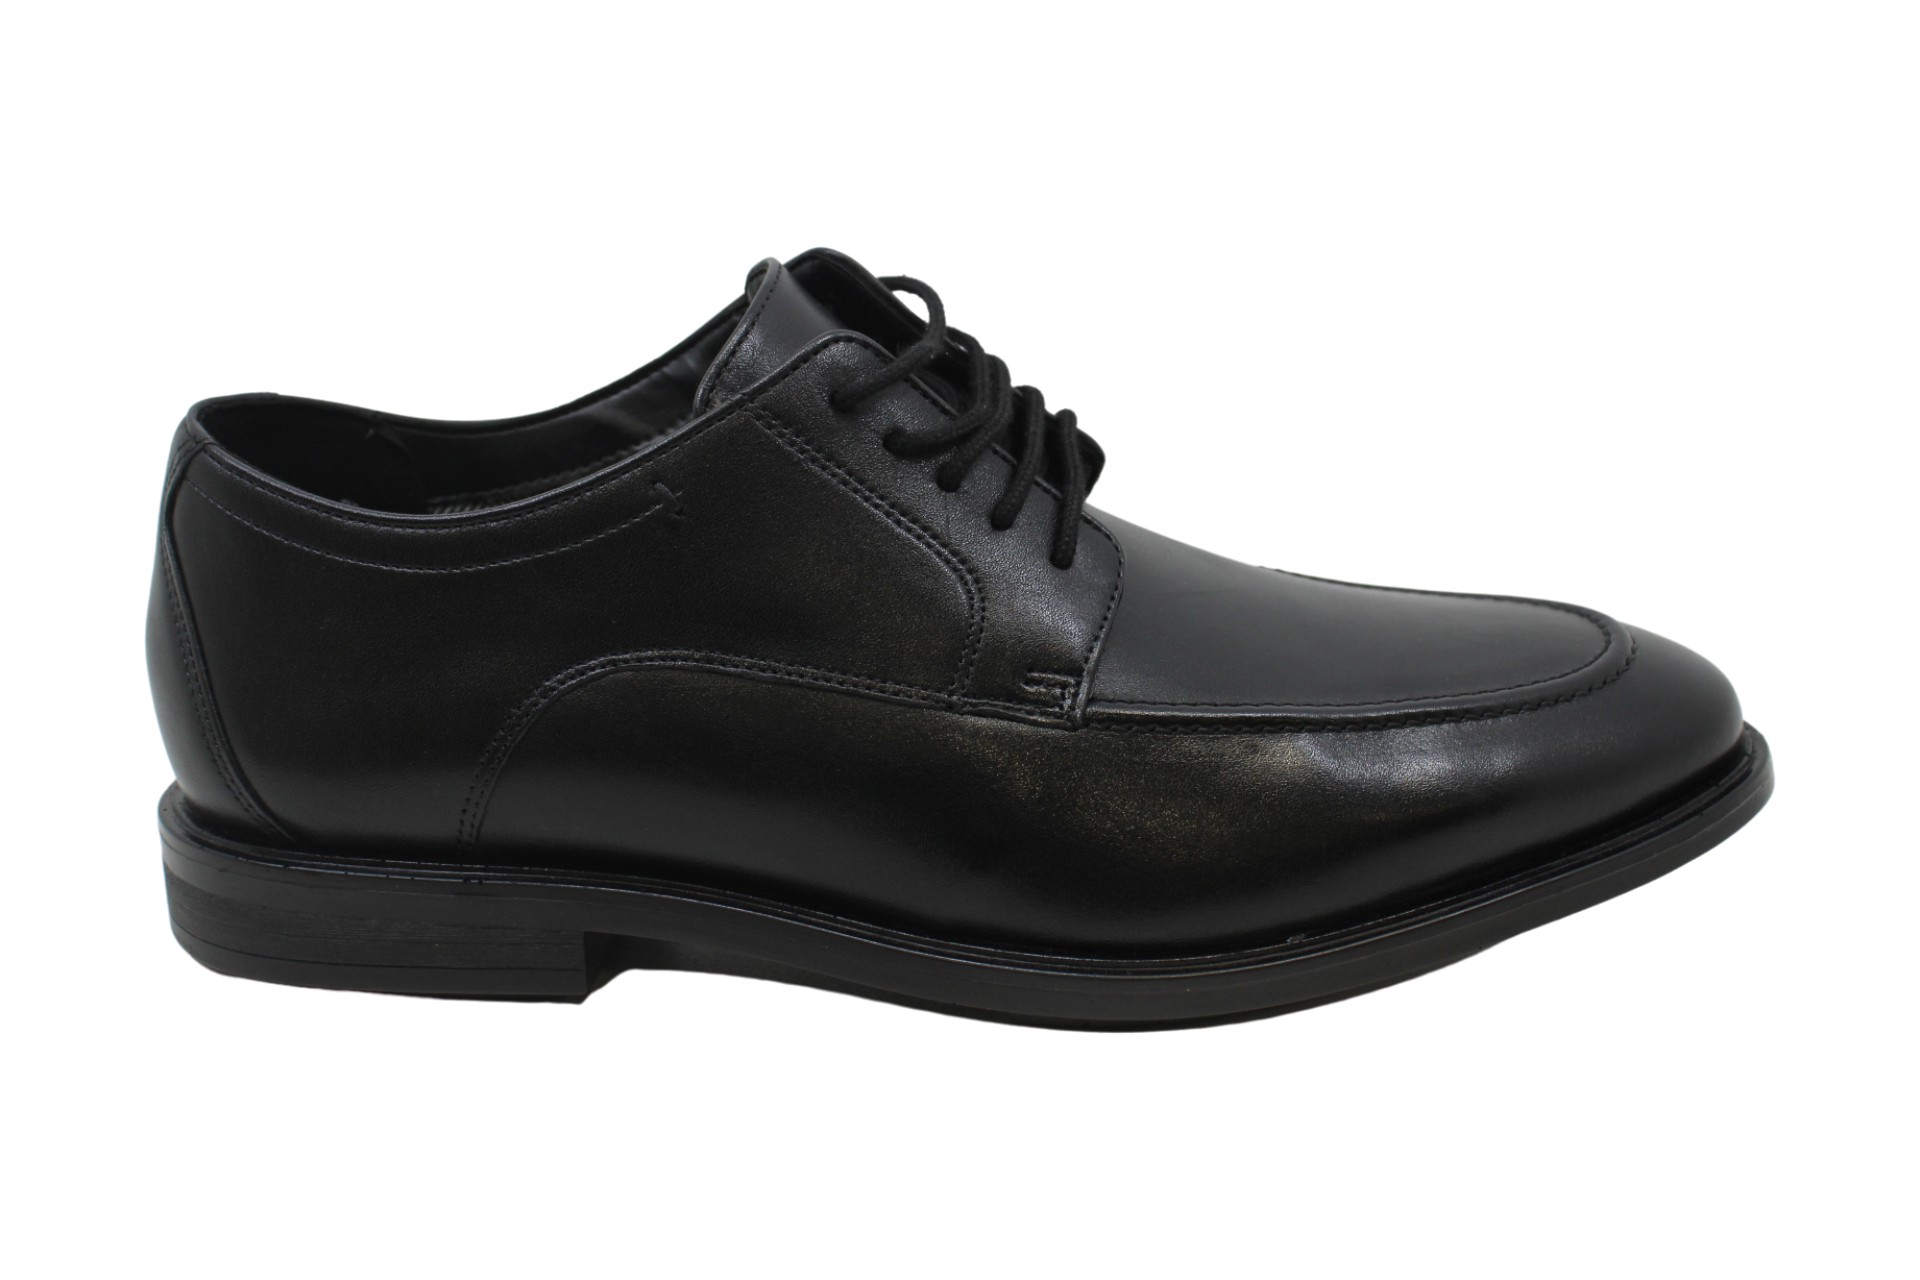 Bostonian Mens Oxfords, Dress Shoes in Black Color, Size 8 KHV ...